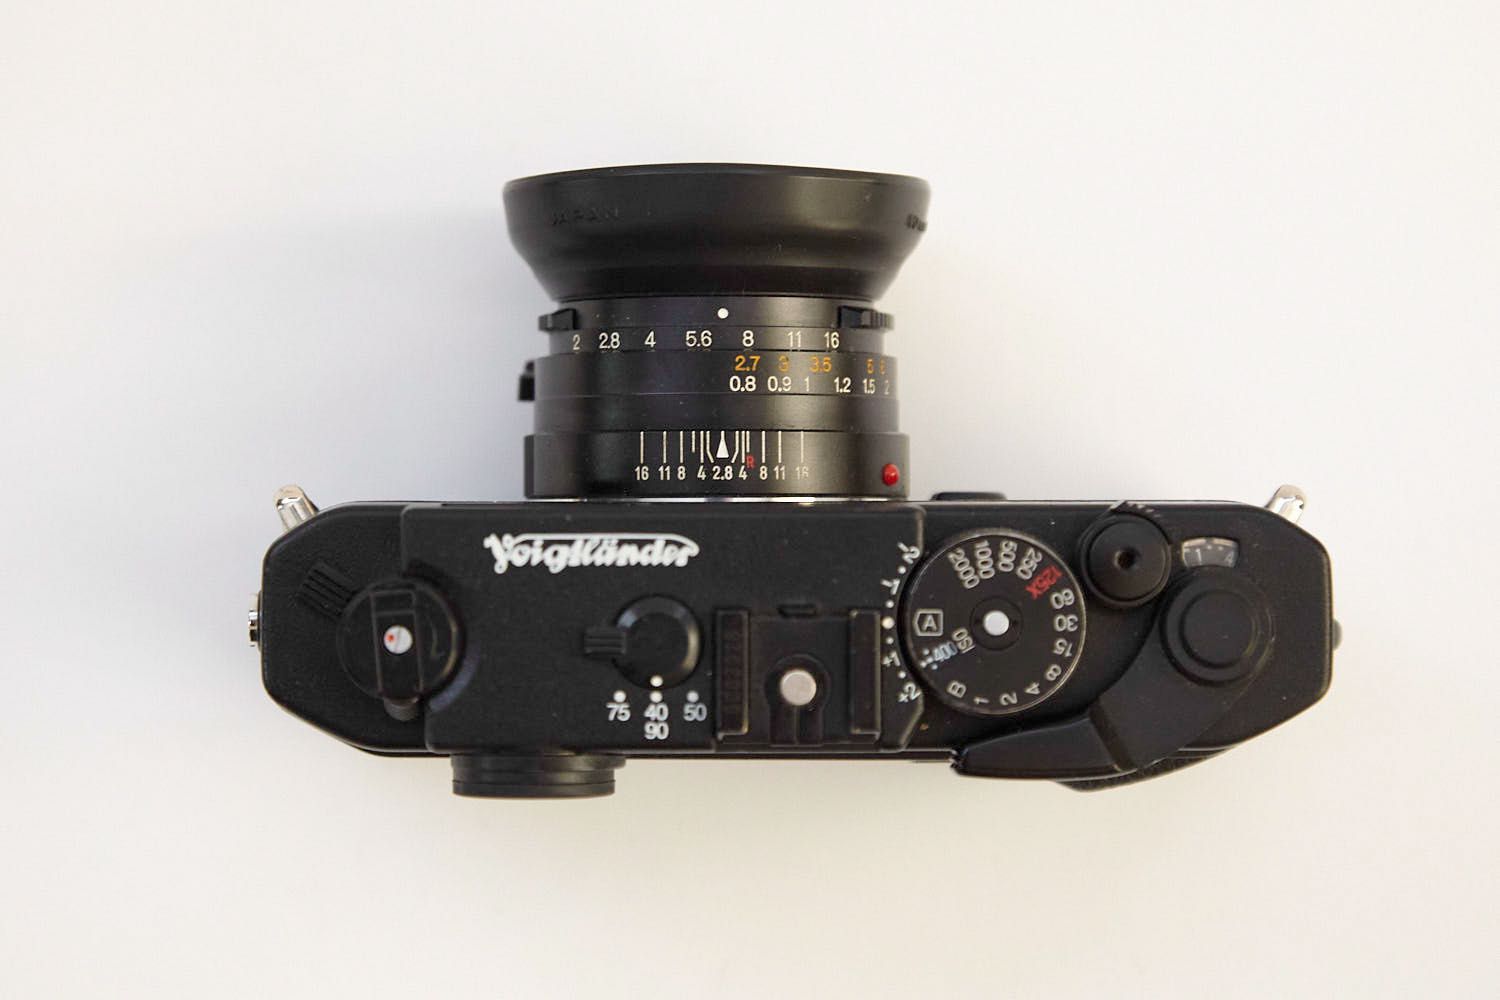 Voigtlander Bessa R3A z obiektywem Minolta Rokkor 40 mm f/2